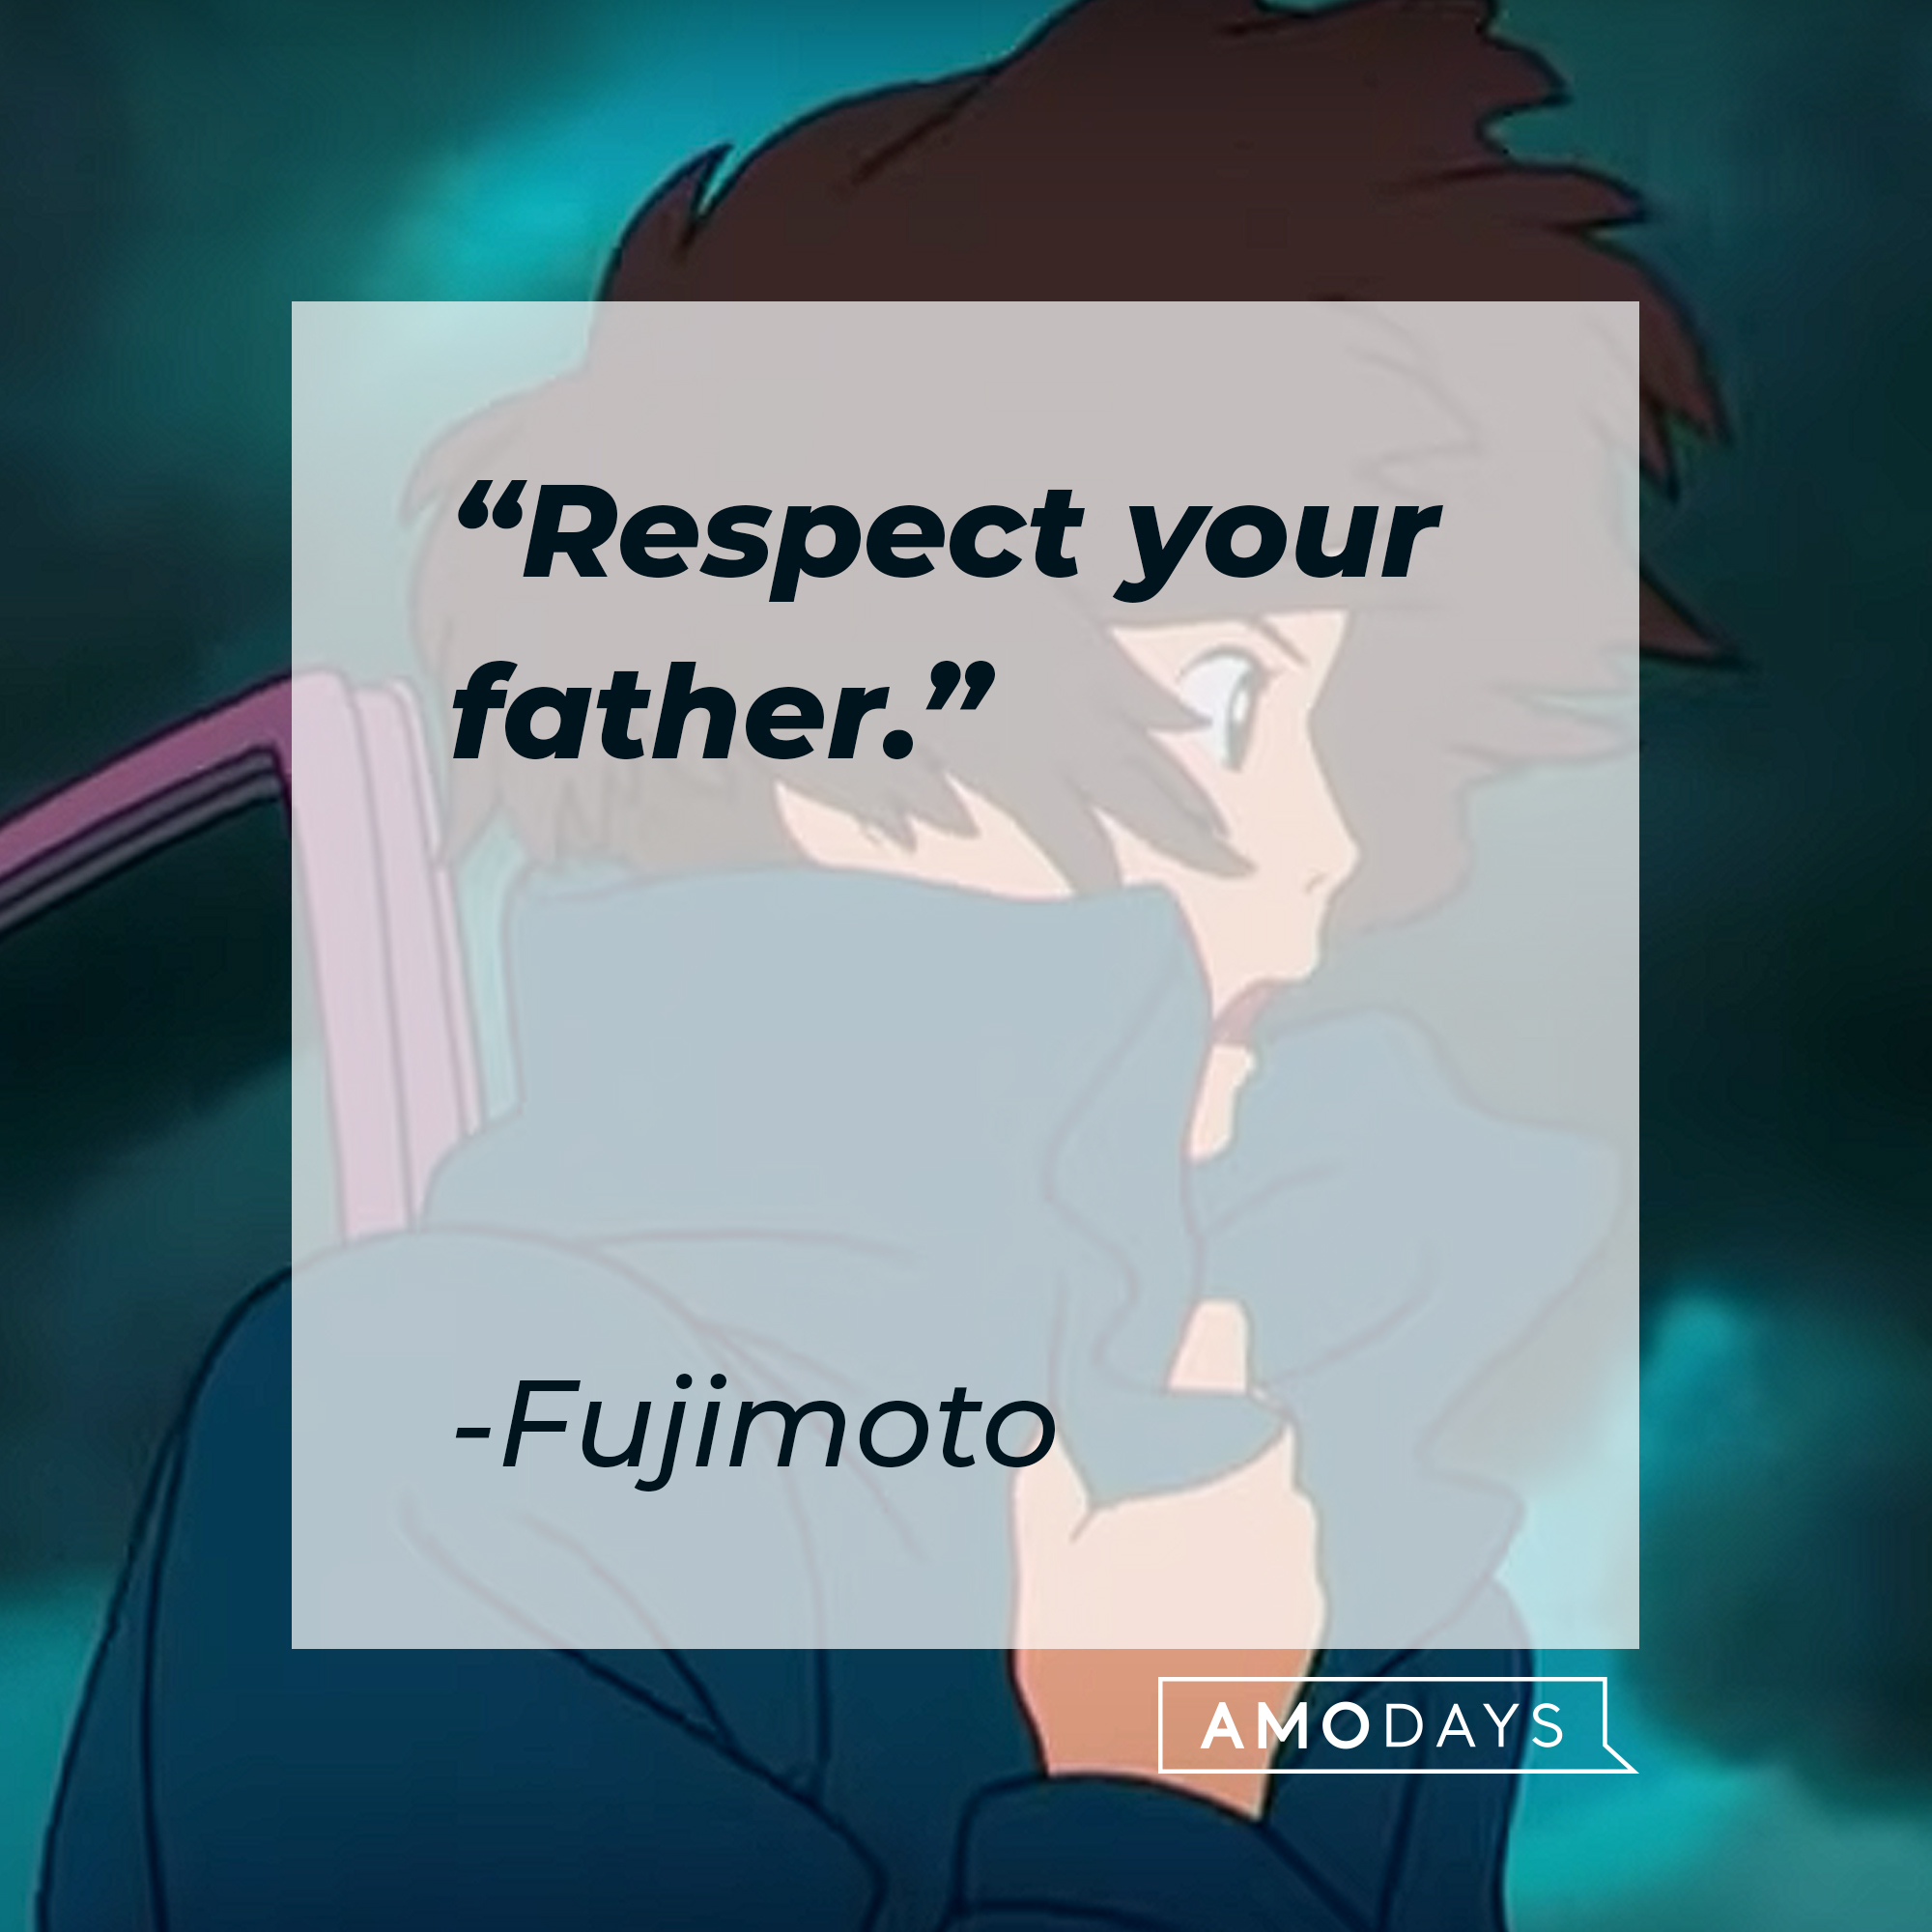 Fujimoto's quote: "Respect your father." | Source: Youtube.com/crunchyrollstoreau